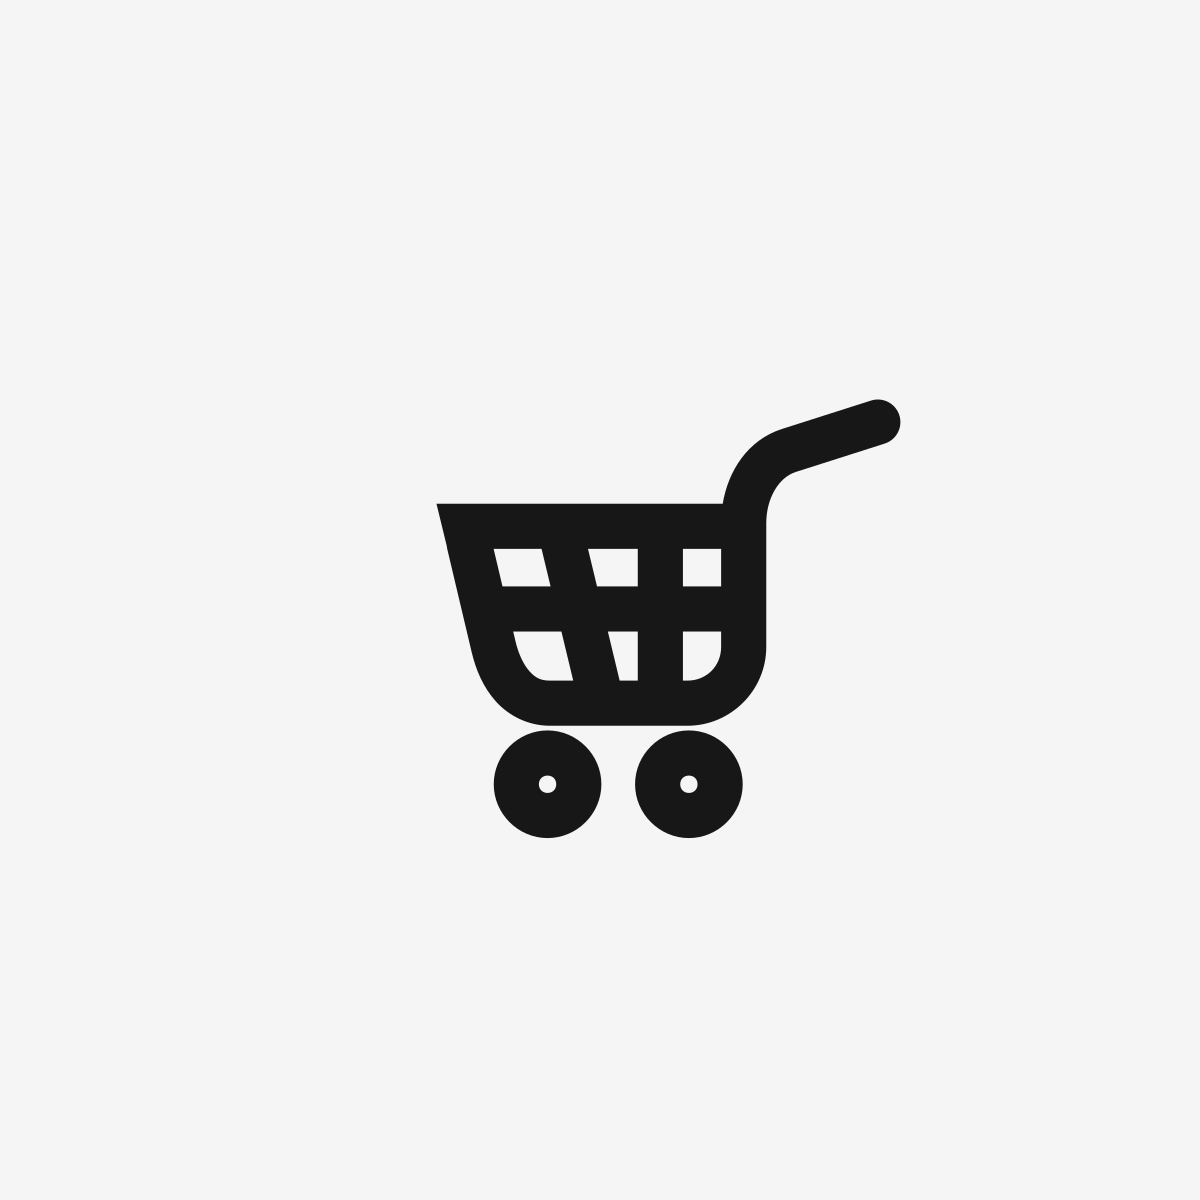 good choice indeed #cart, #shop, #shopping, #eshop, #eshopping, #products, #merchants, #merchant, #merchandise, #freelogo, #freelogotype, #freeicon, #freepictogram freeletterheads.blogspot.com/2023/06/cart-s…